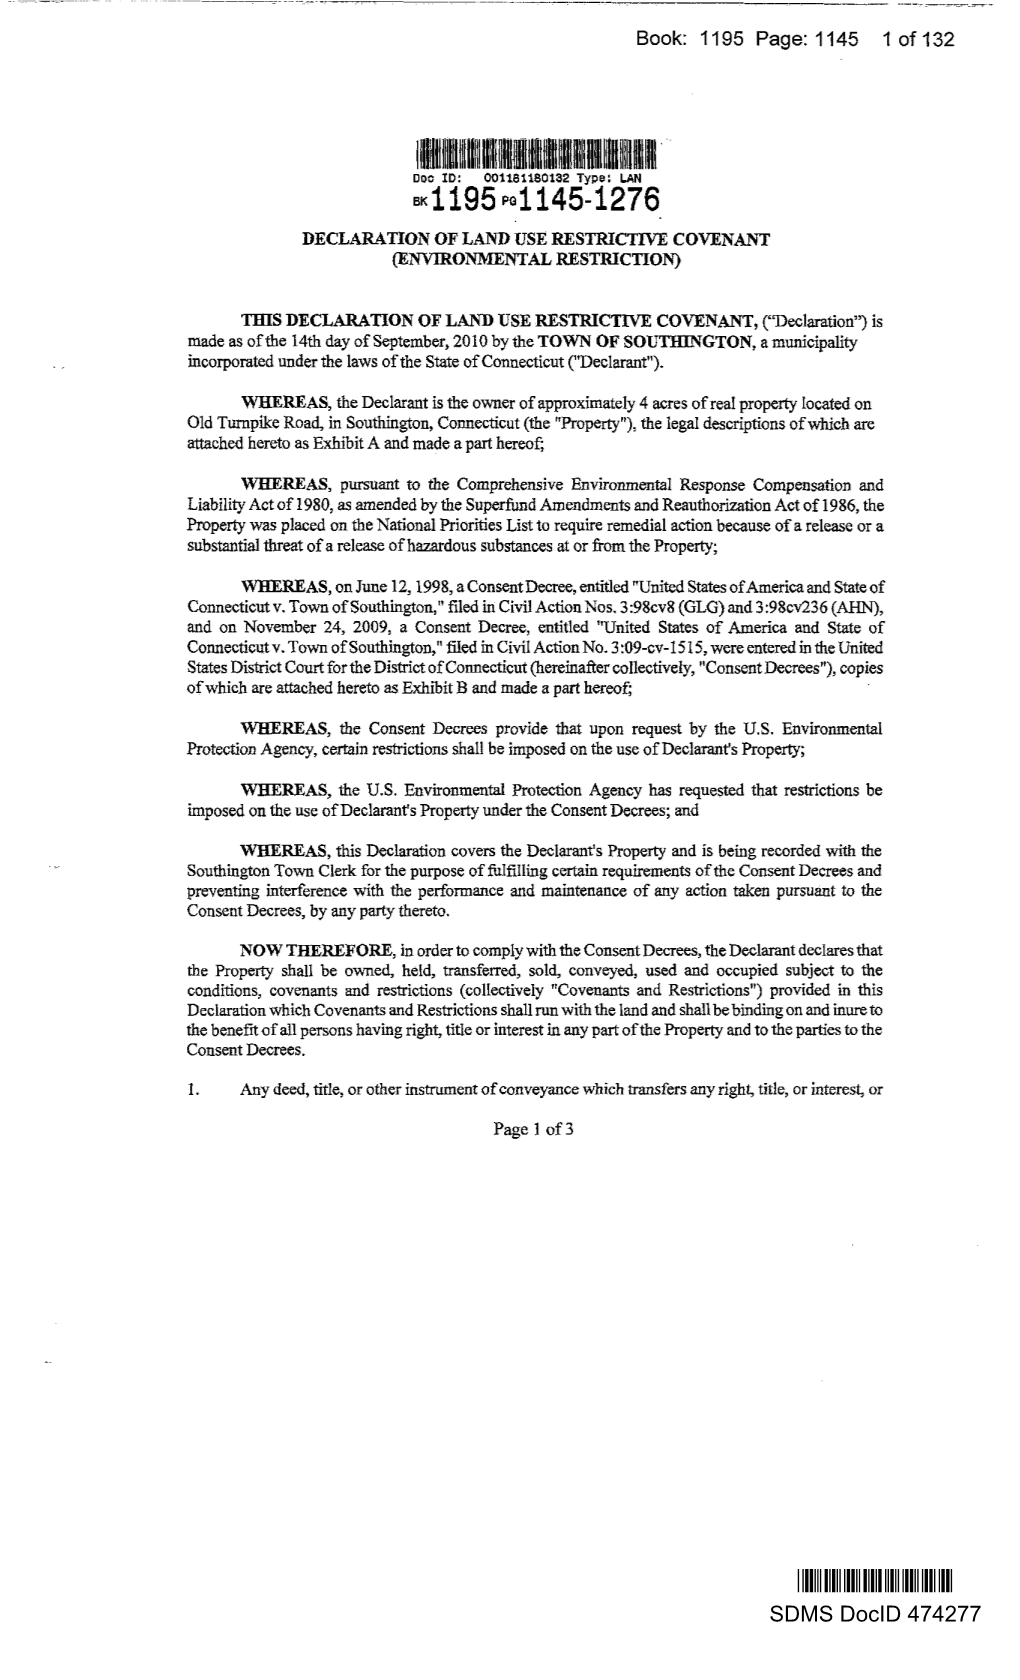 Declaration of Land Use Restrictive Covenant (Environmental Restriction)